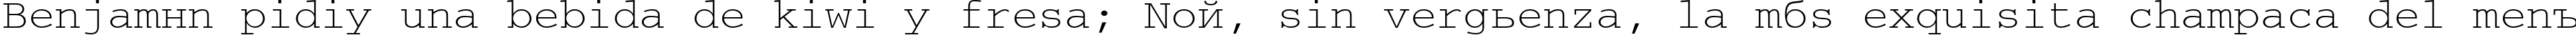 Пример написания шрифтом UkrainianCourier текста на испанском